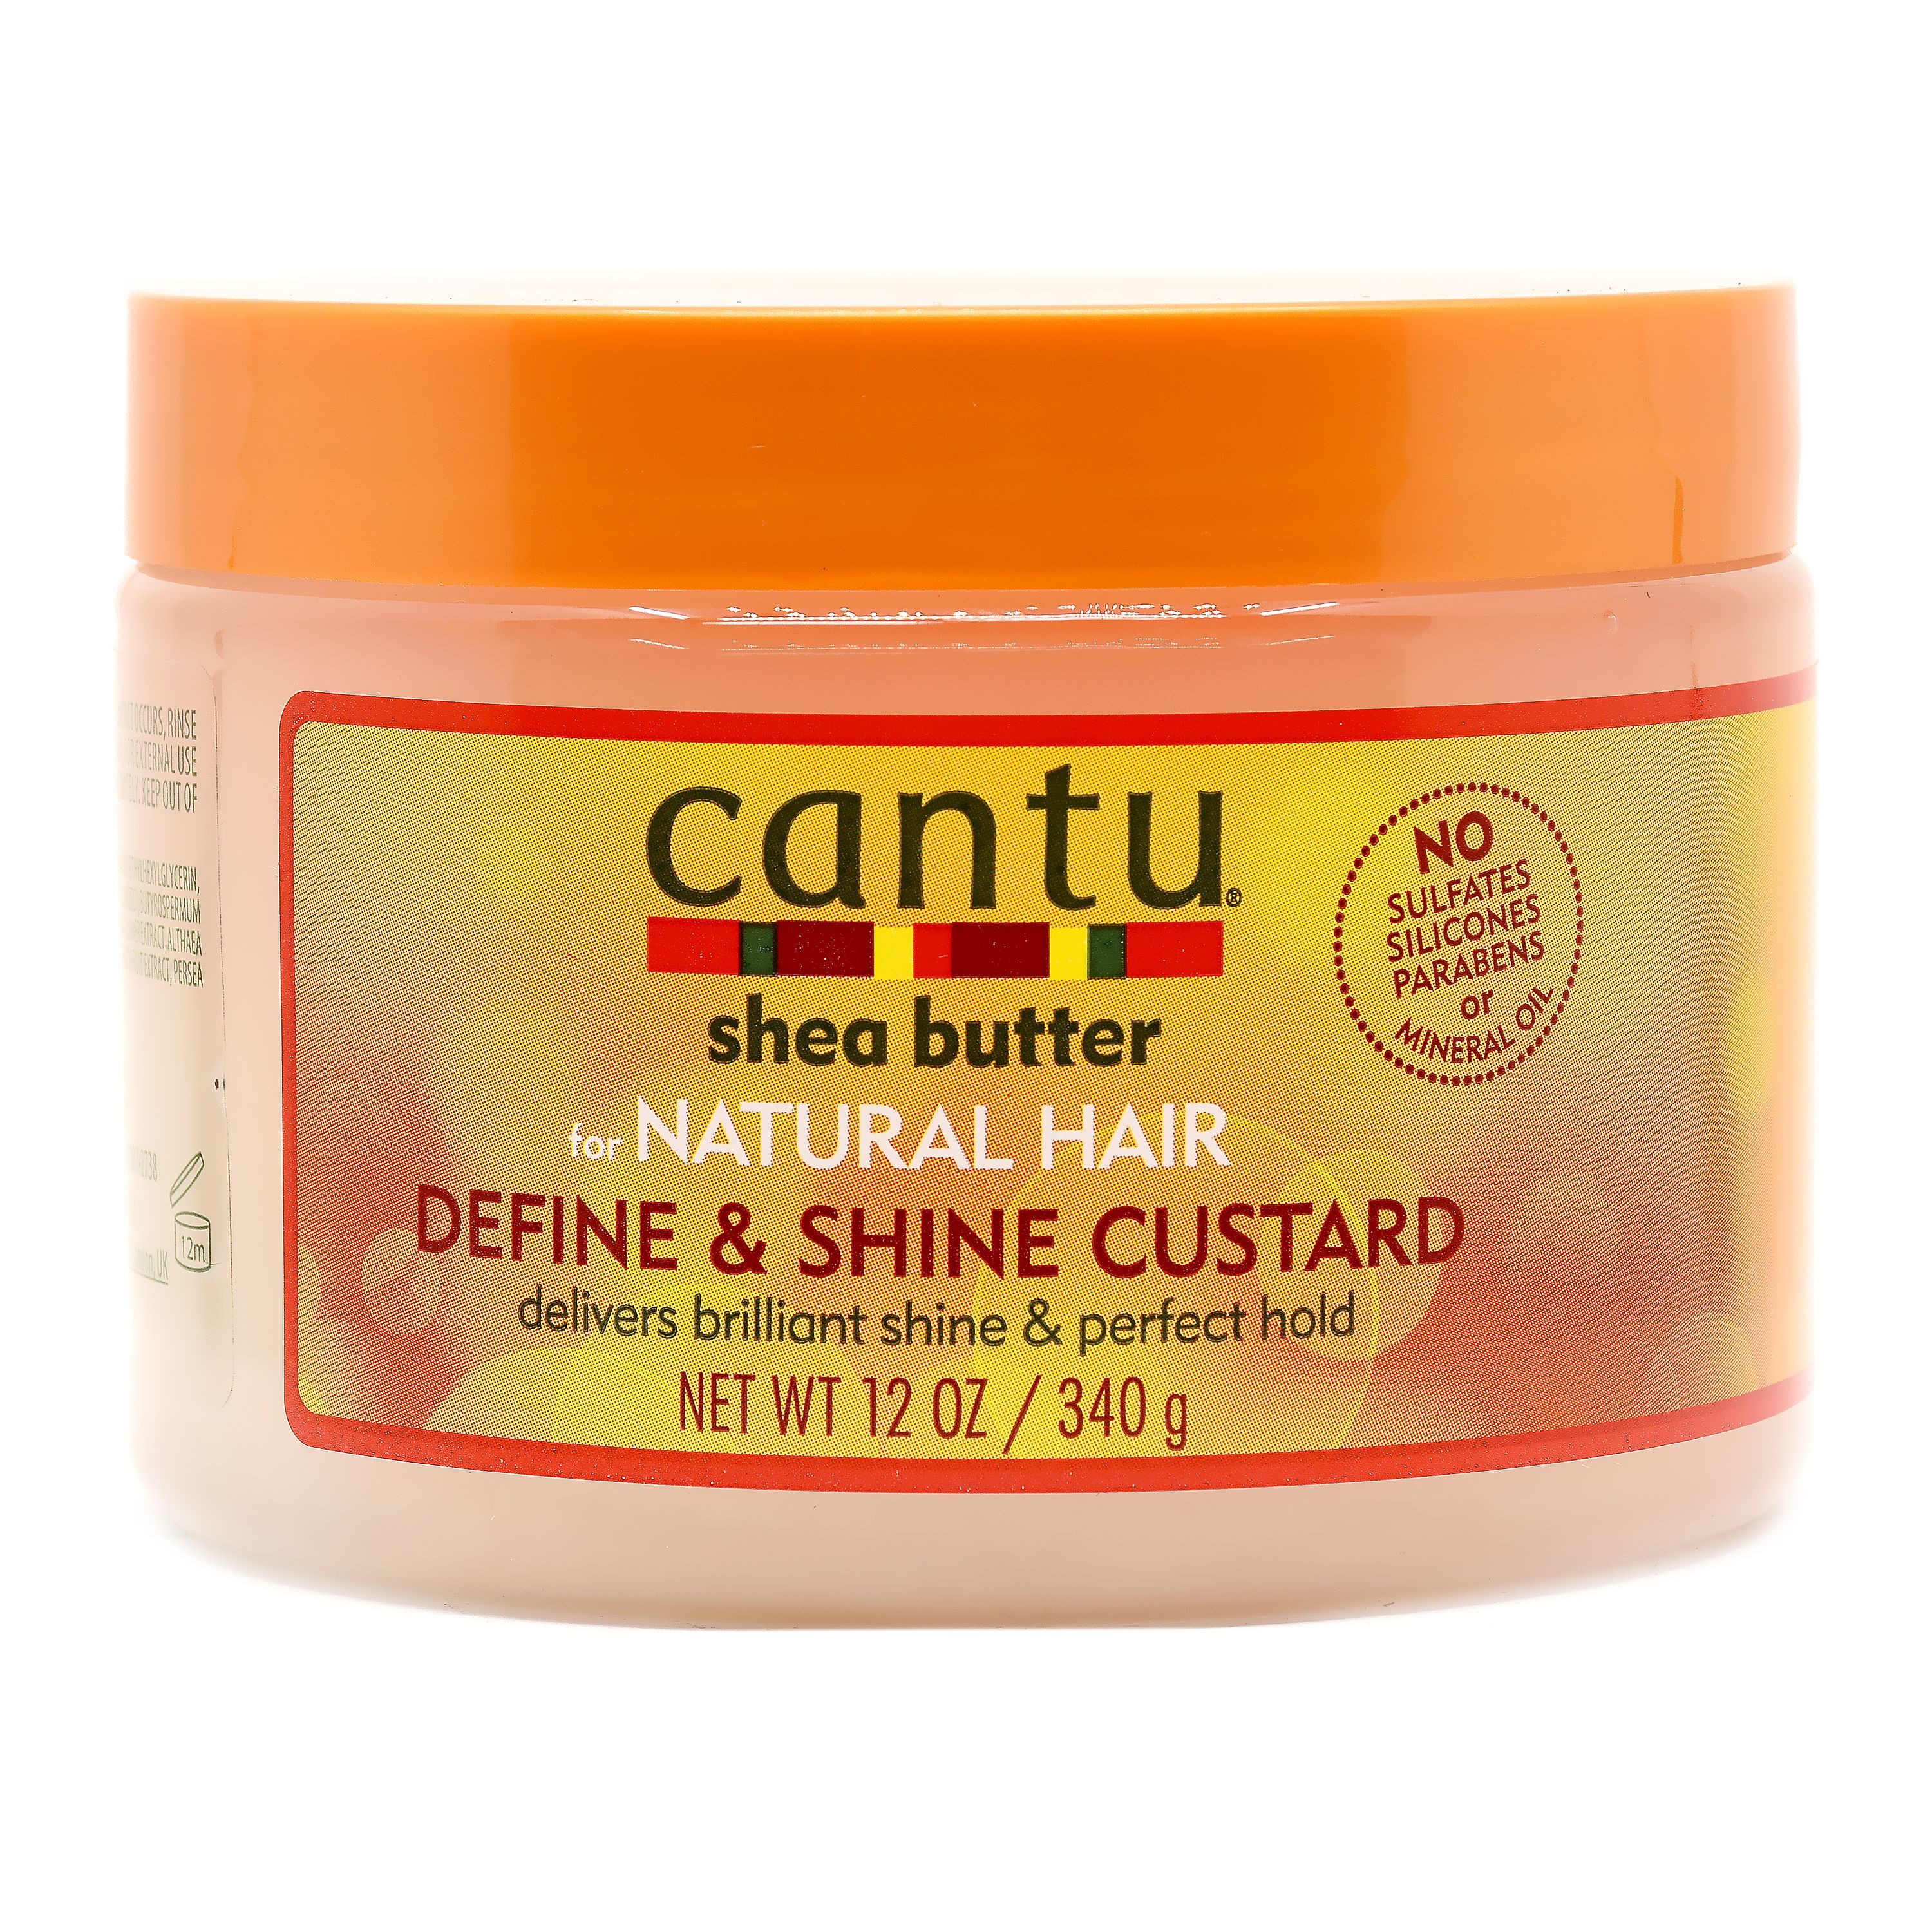 Cantu Shea Butter Define & Shine Custard For Natural Hair - 340g